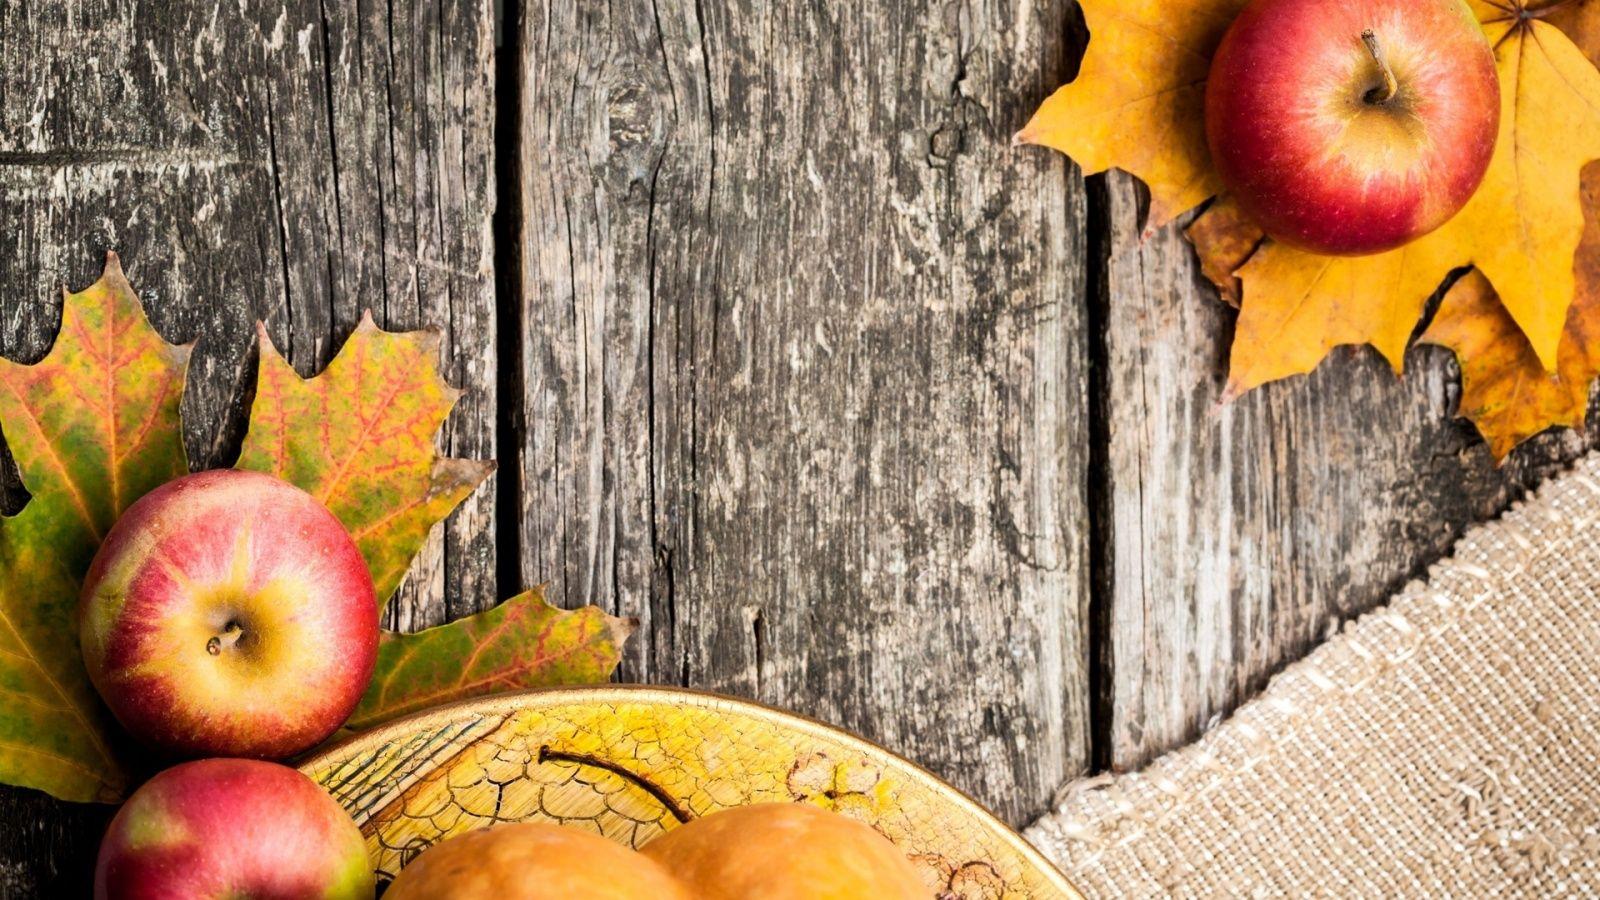 Fall Harvest Wallpaper High Resolution. Fall wallpaper, Desktop wallpaper fall, Fall harvest